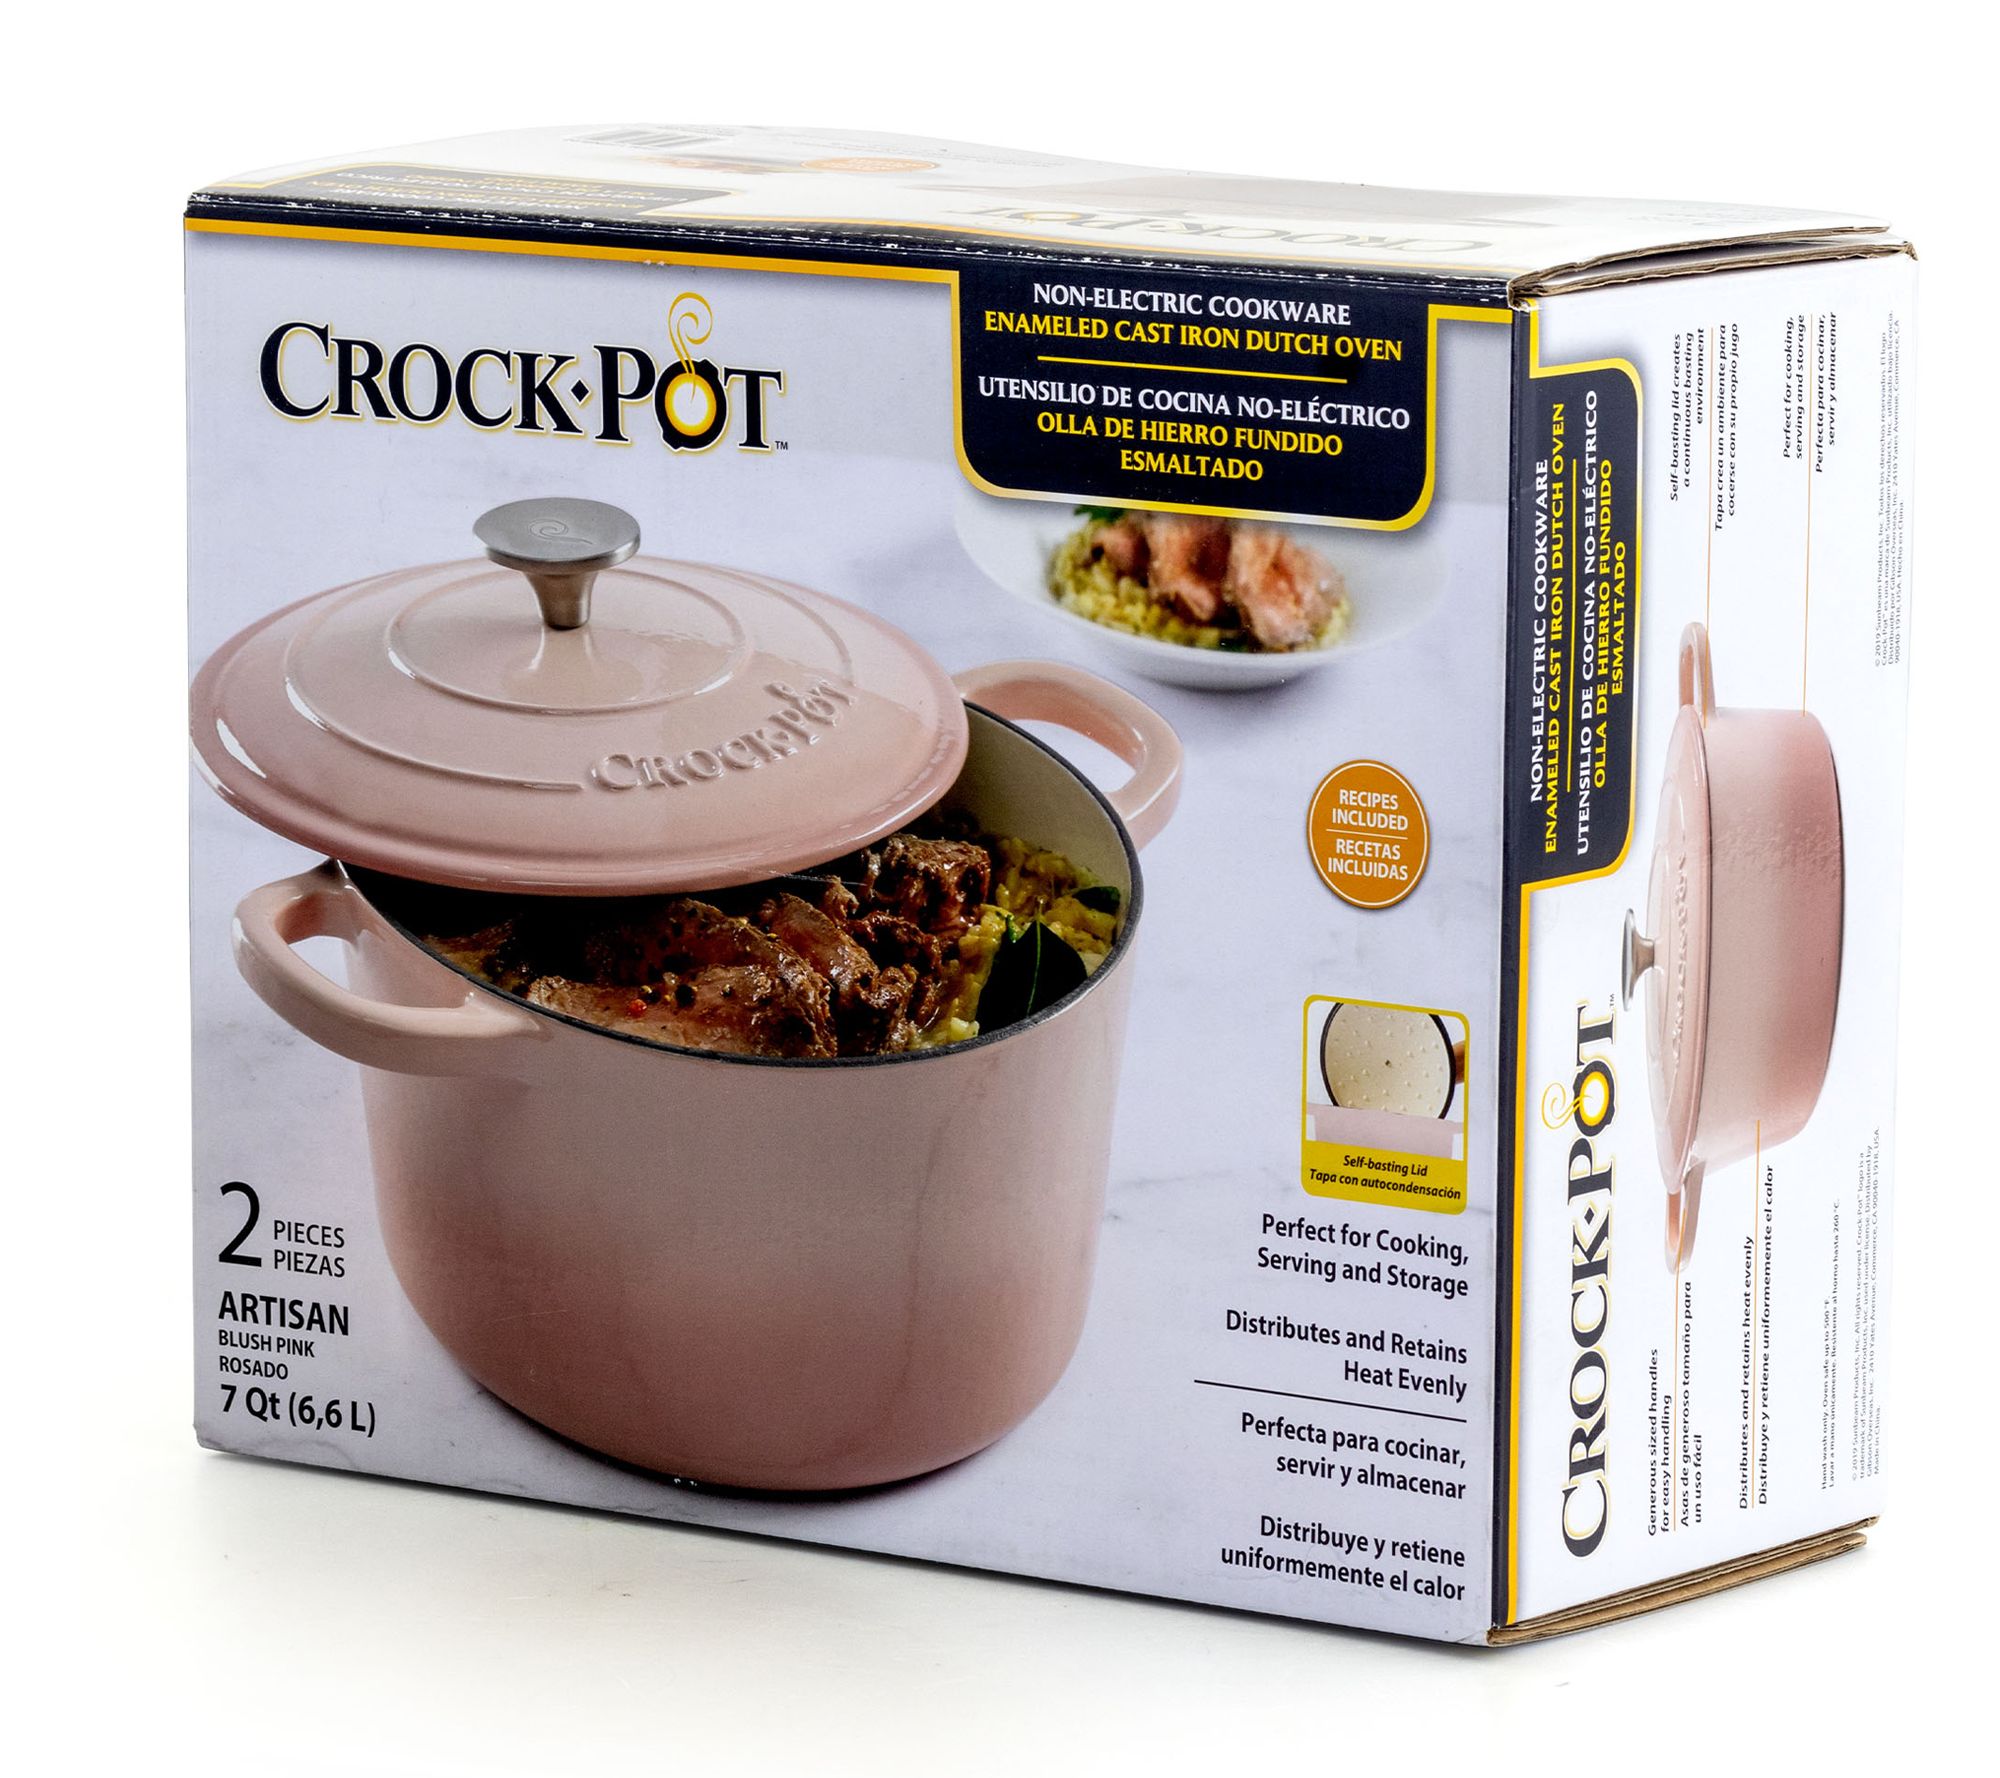 Crock-pot Artisan 7 Qt Dutch Oven : Target